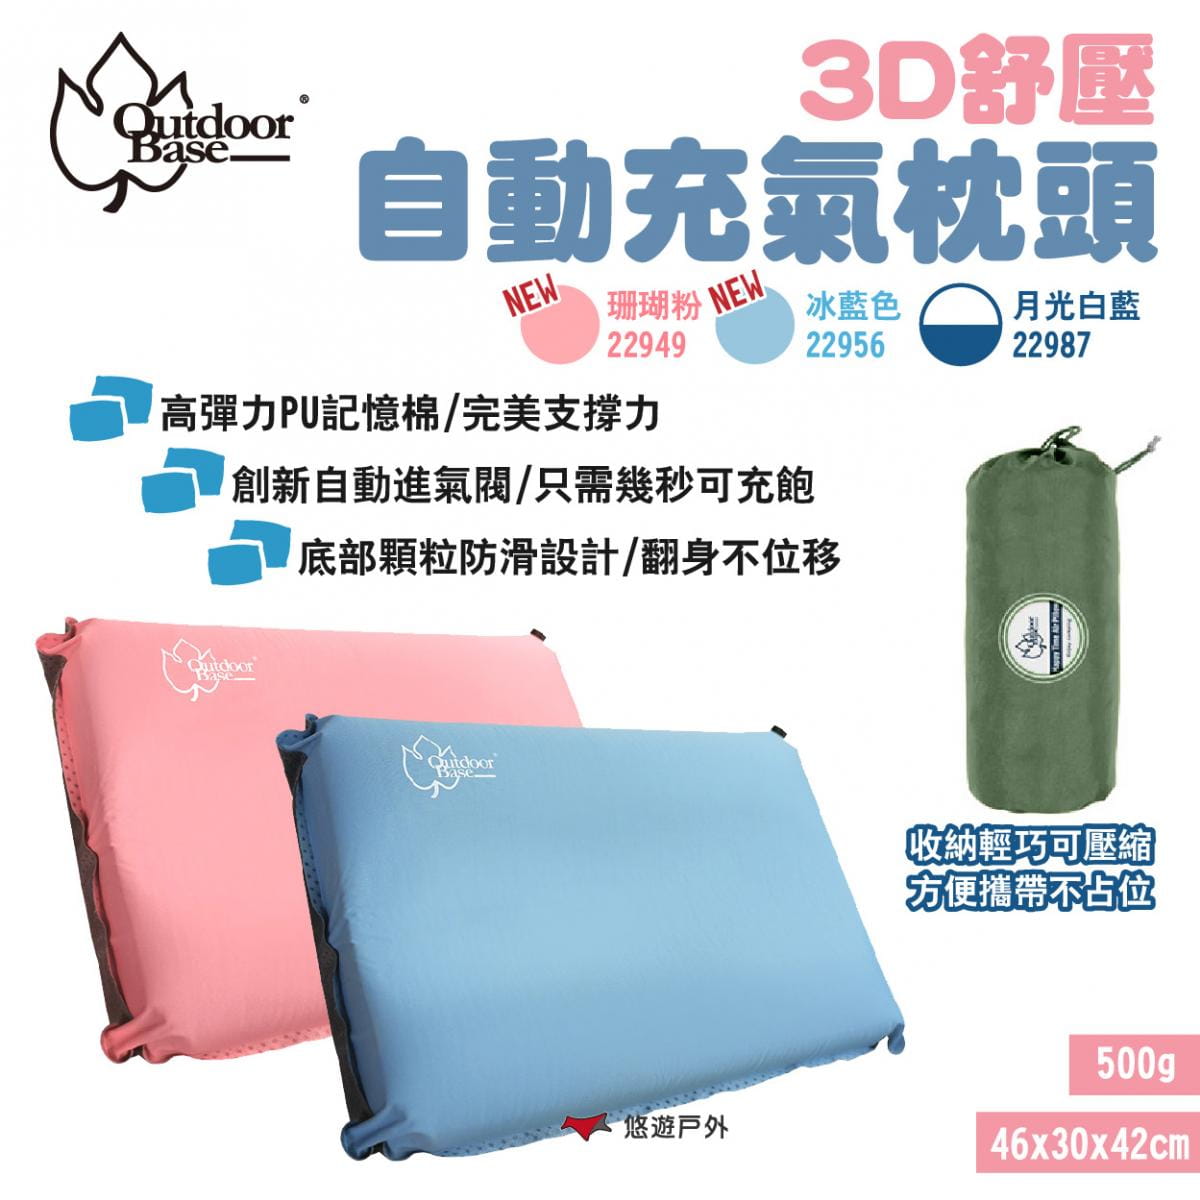 【OutdoorBase】3D舒壓自動充氣枕頭 珊瑚粉/冰藍/月光白藍 悠遊戶外 1